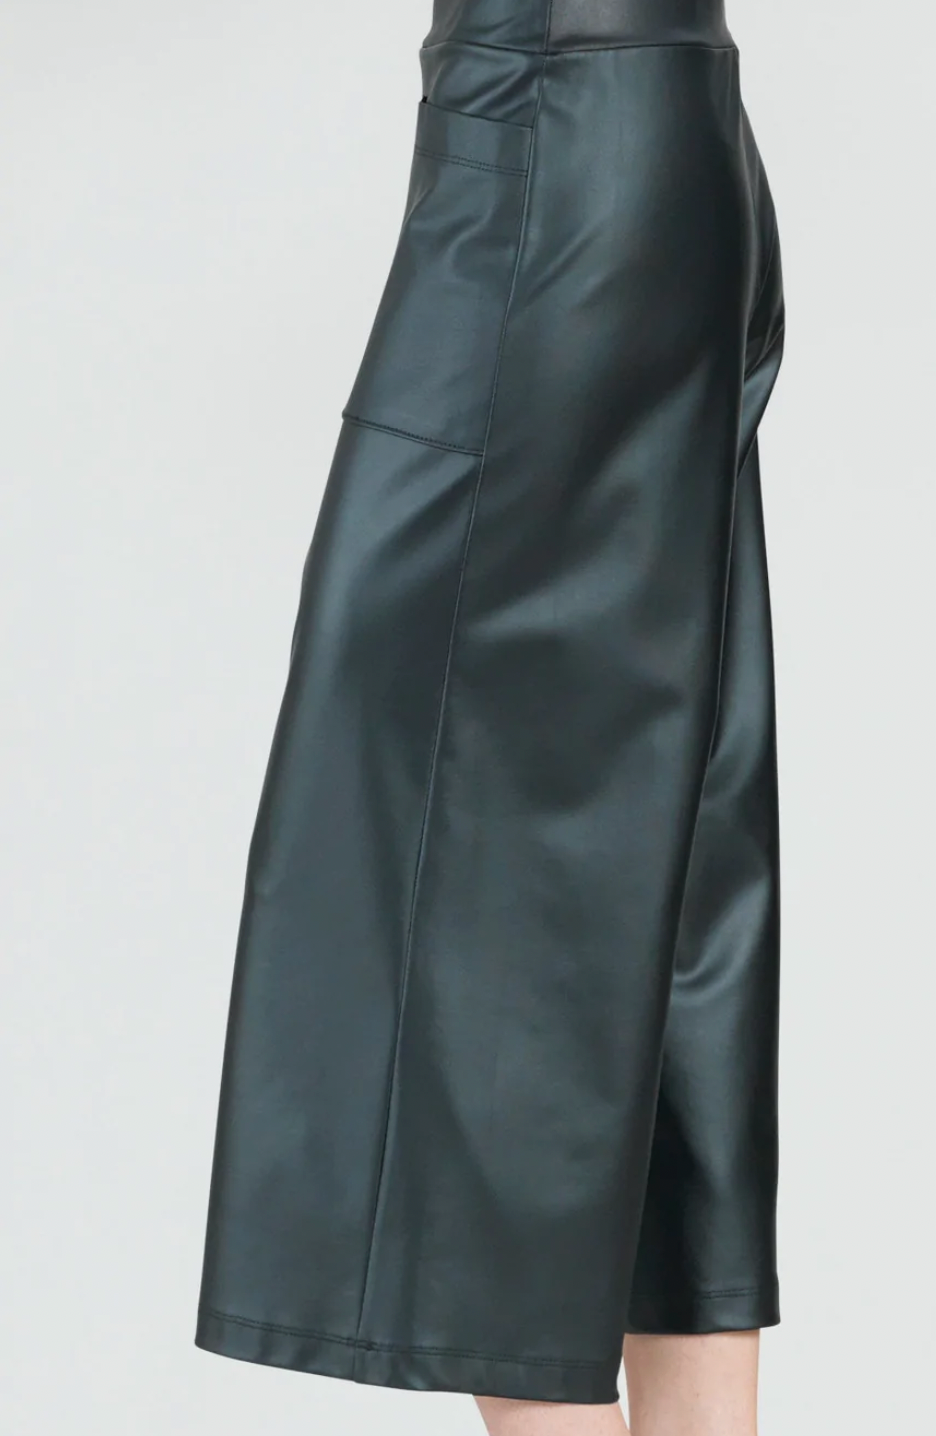 Clara Sun Woo- Liquid Leather Gaucho Pant in Black